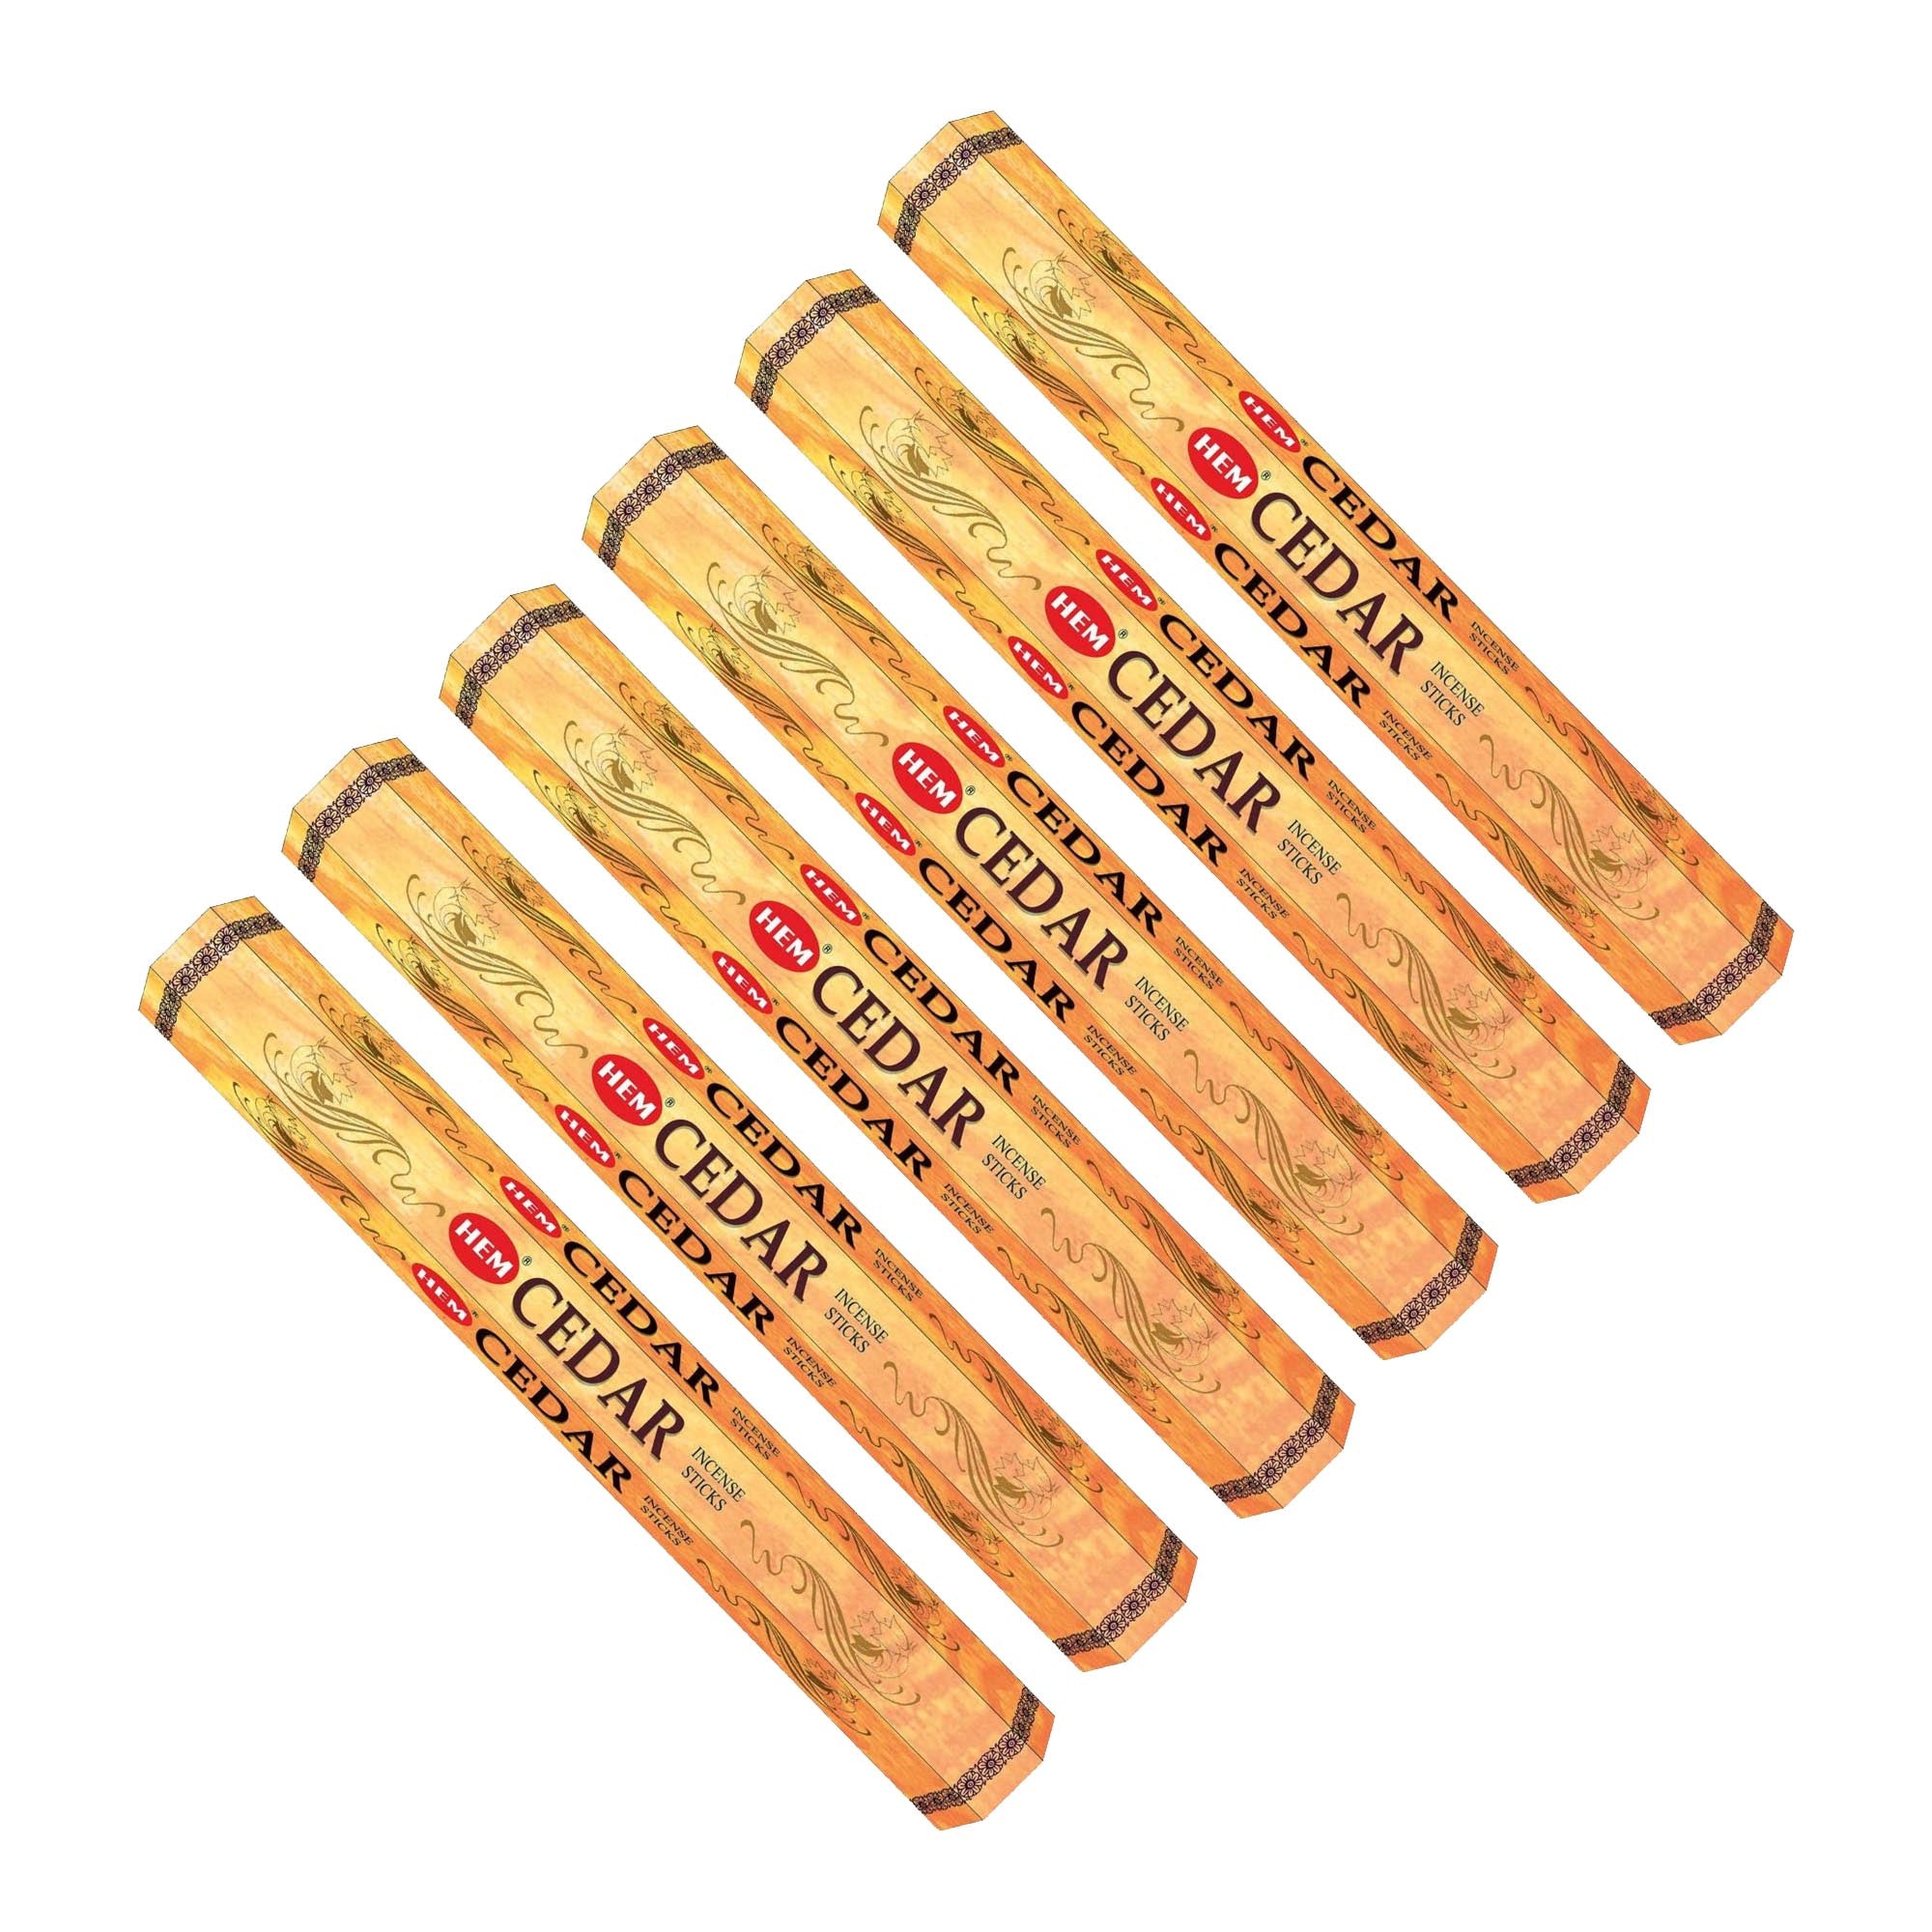 HEM - Hexagon - Cedar Incense Sticks